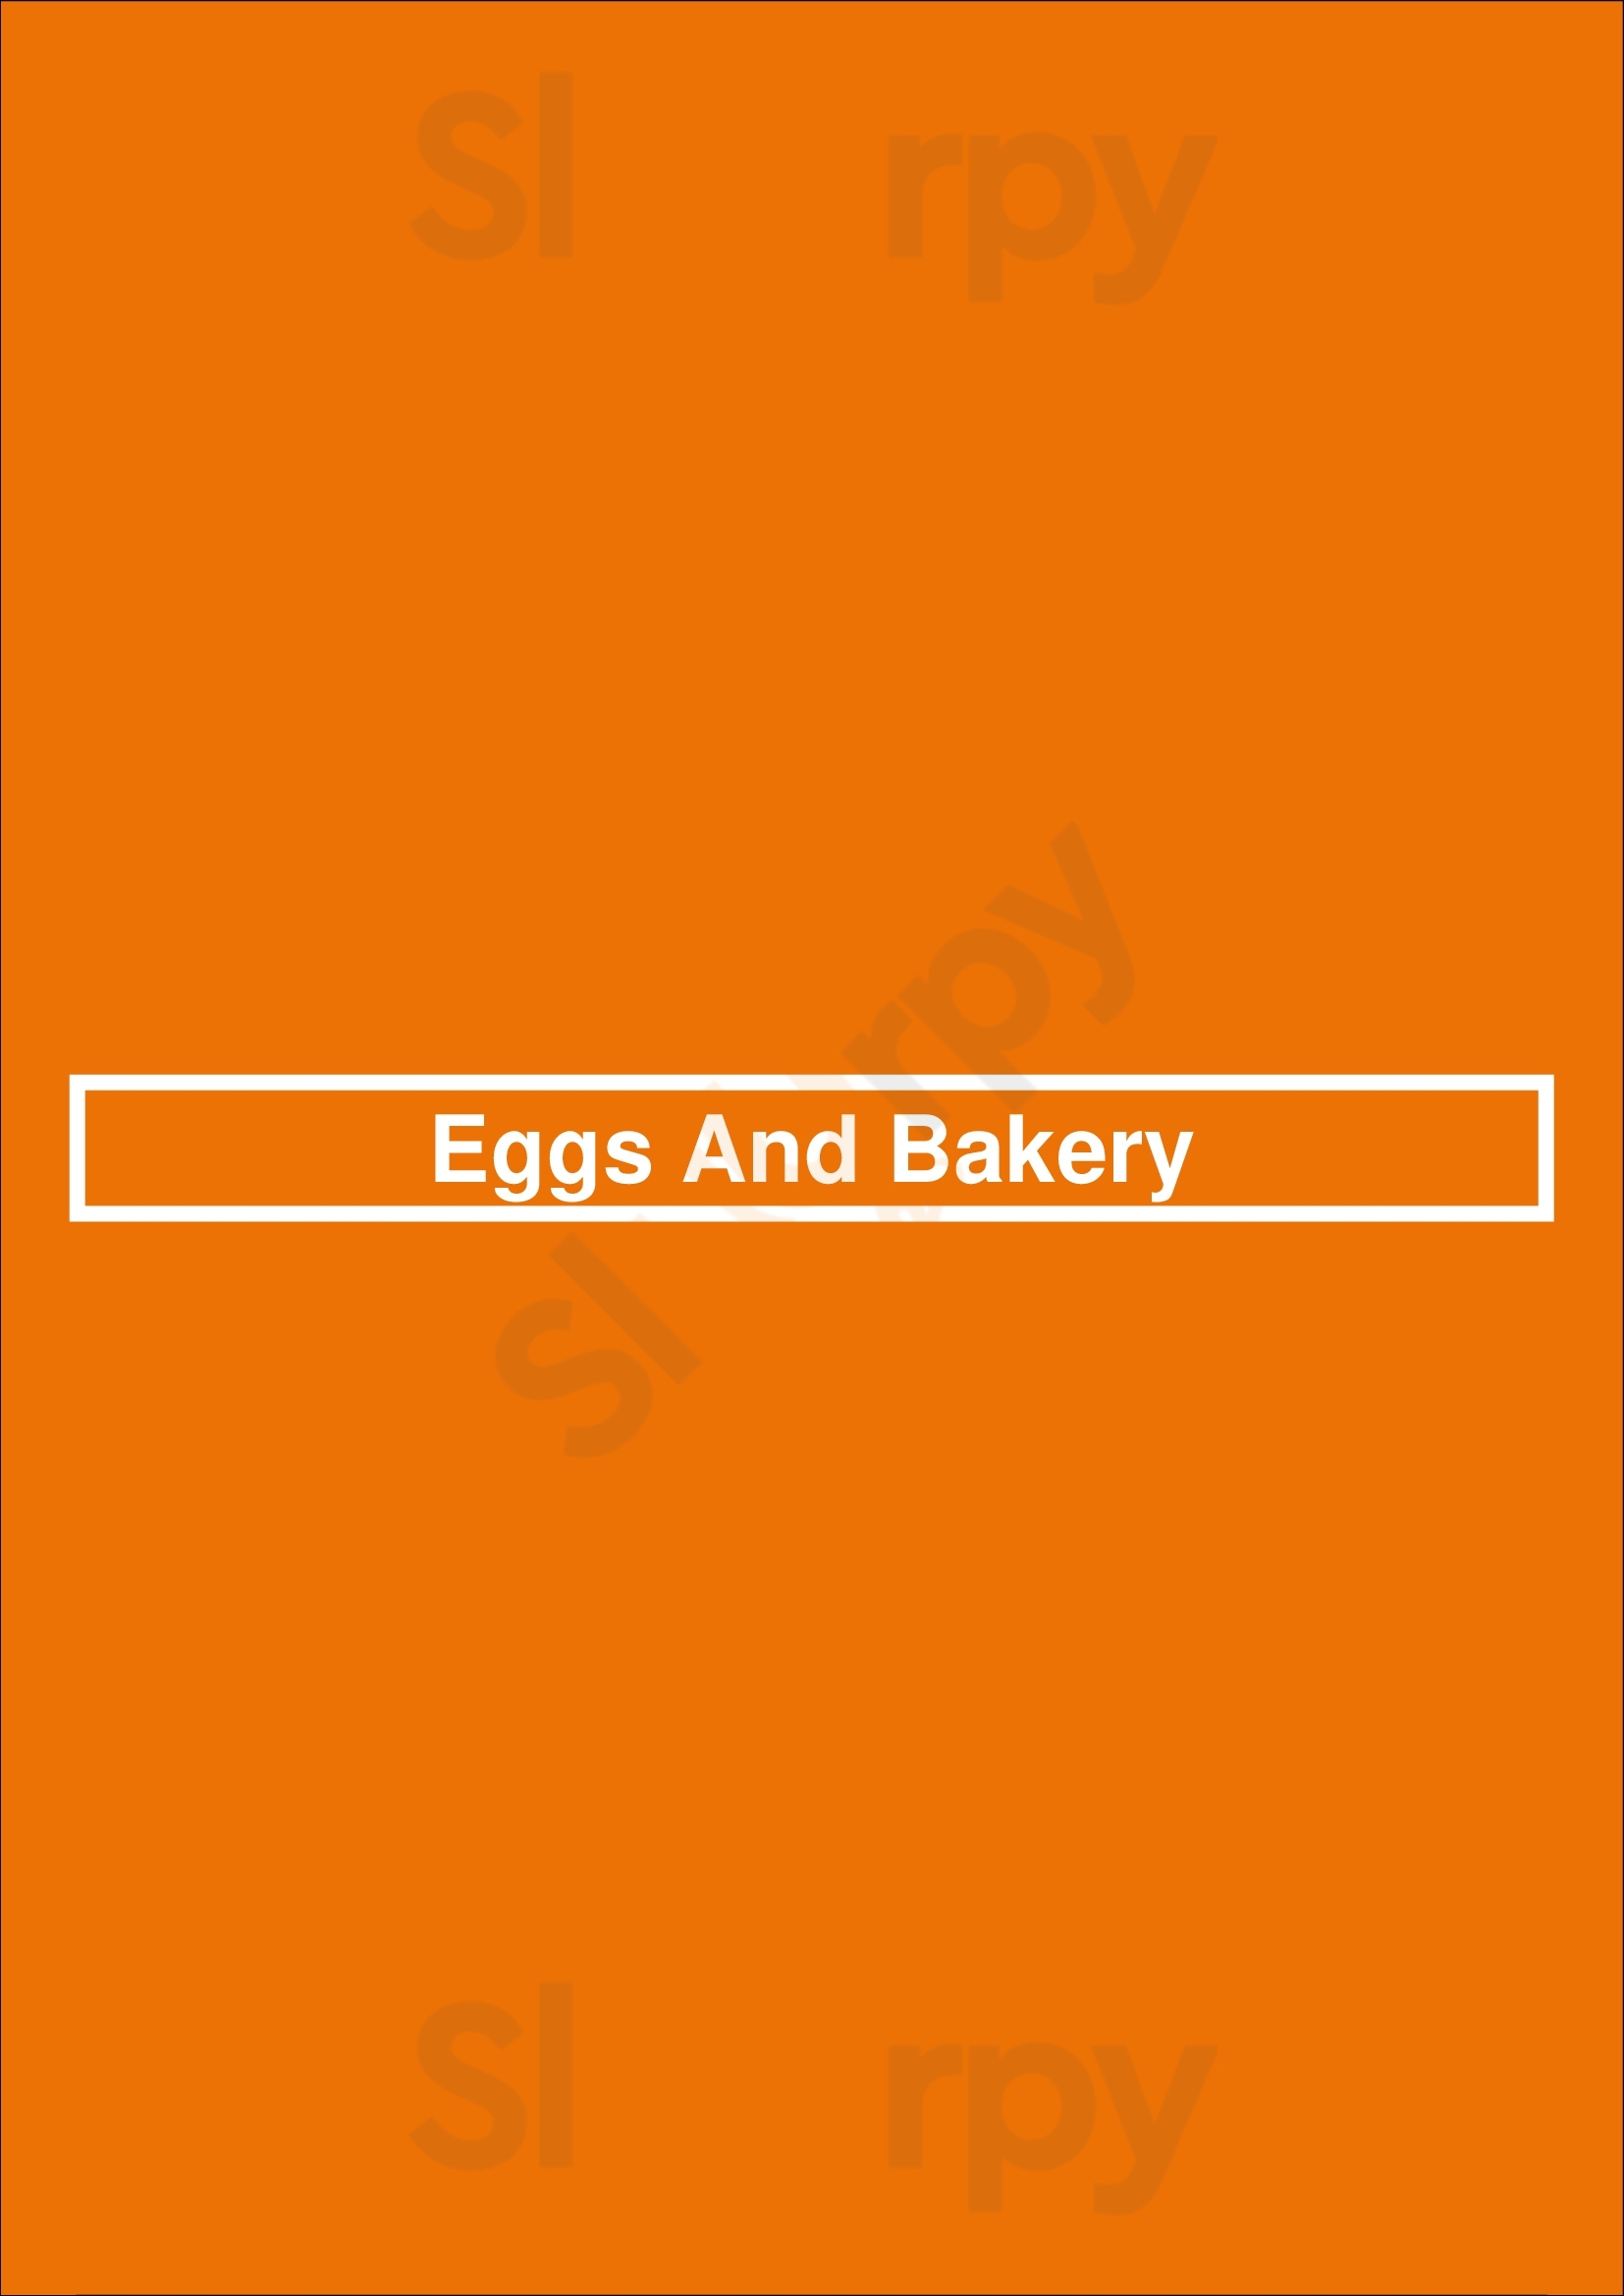 Eggs And Bakery Miami Menu - 1